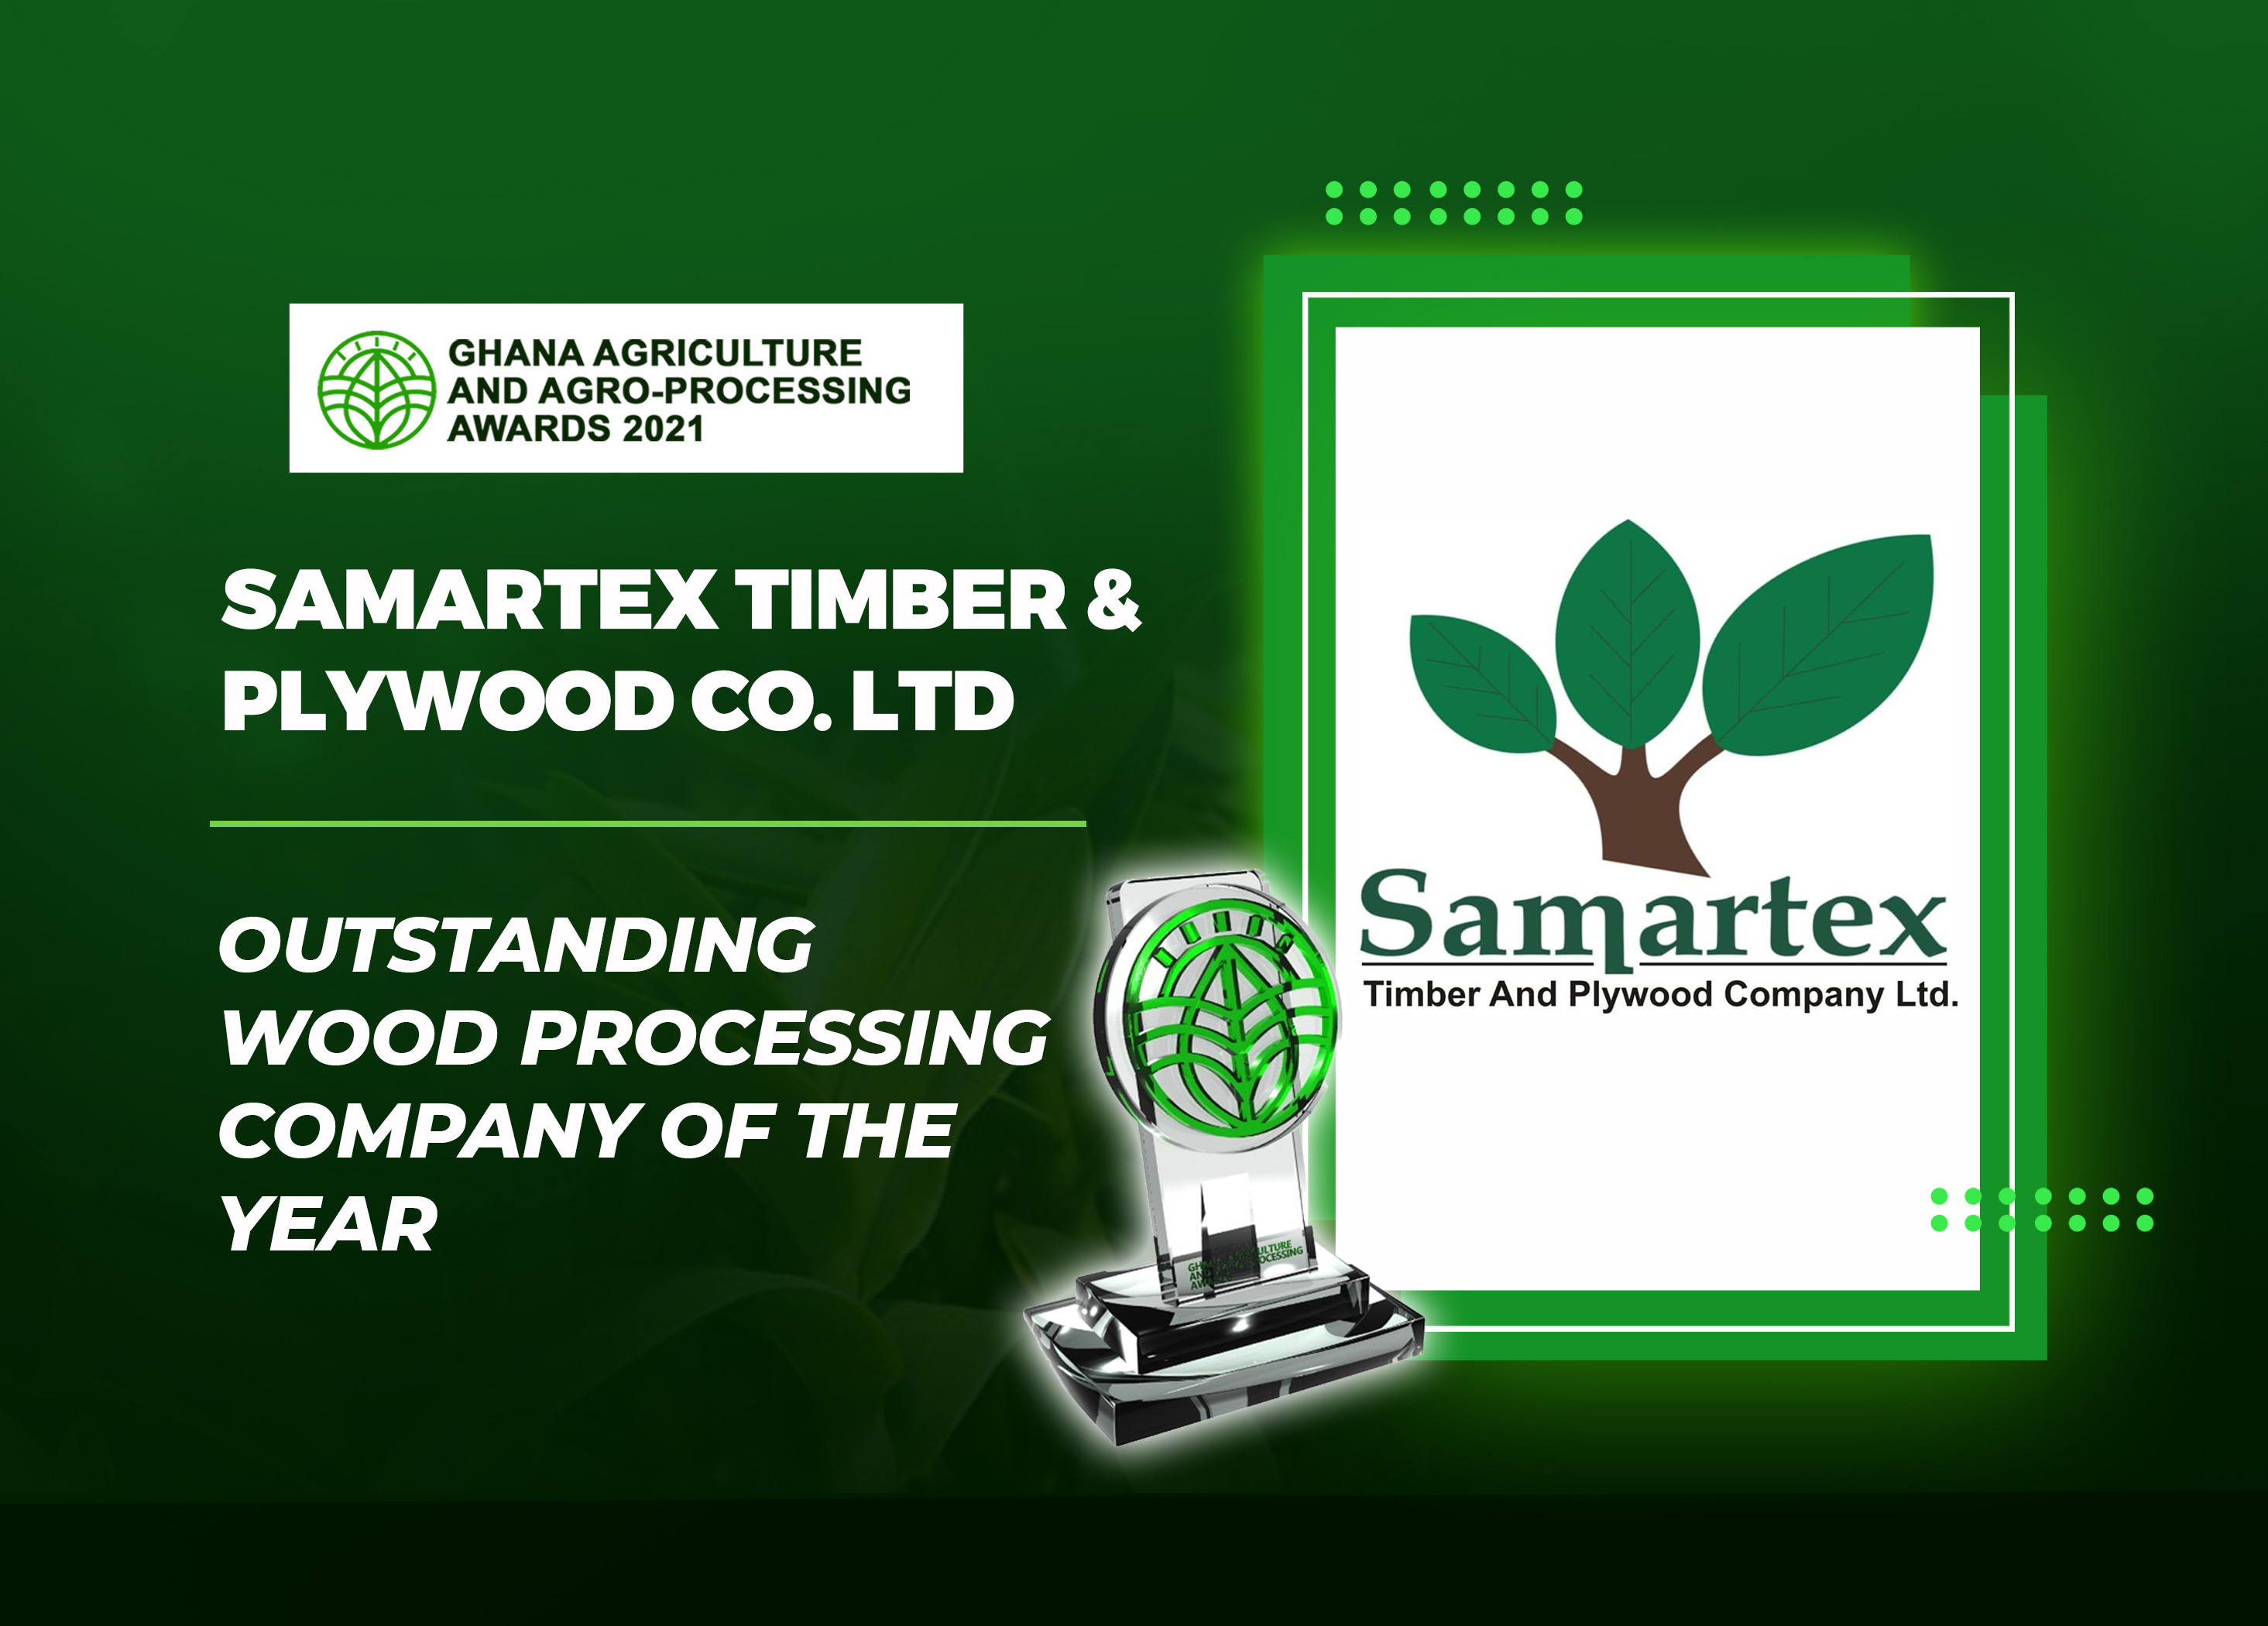 Samartex-Timber-_-Plywood-Co.-Ltd.jpg